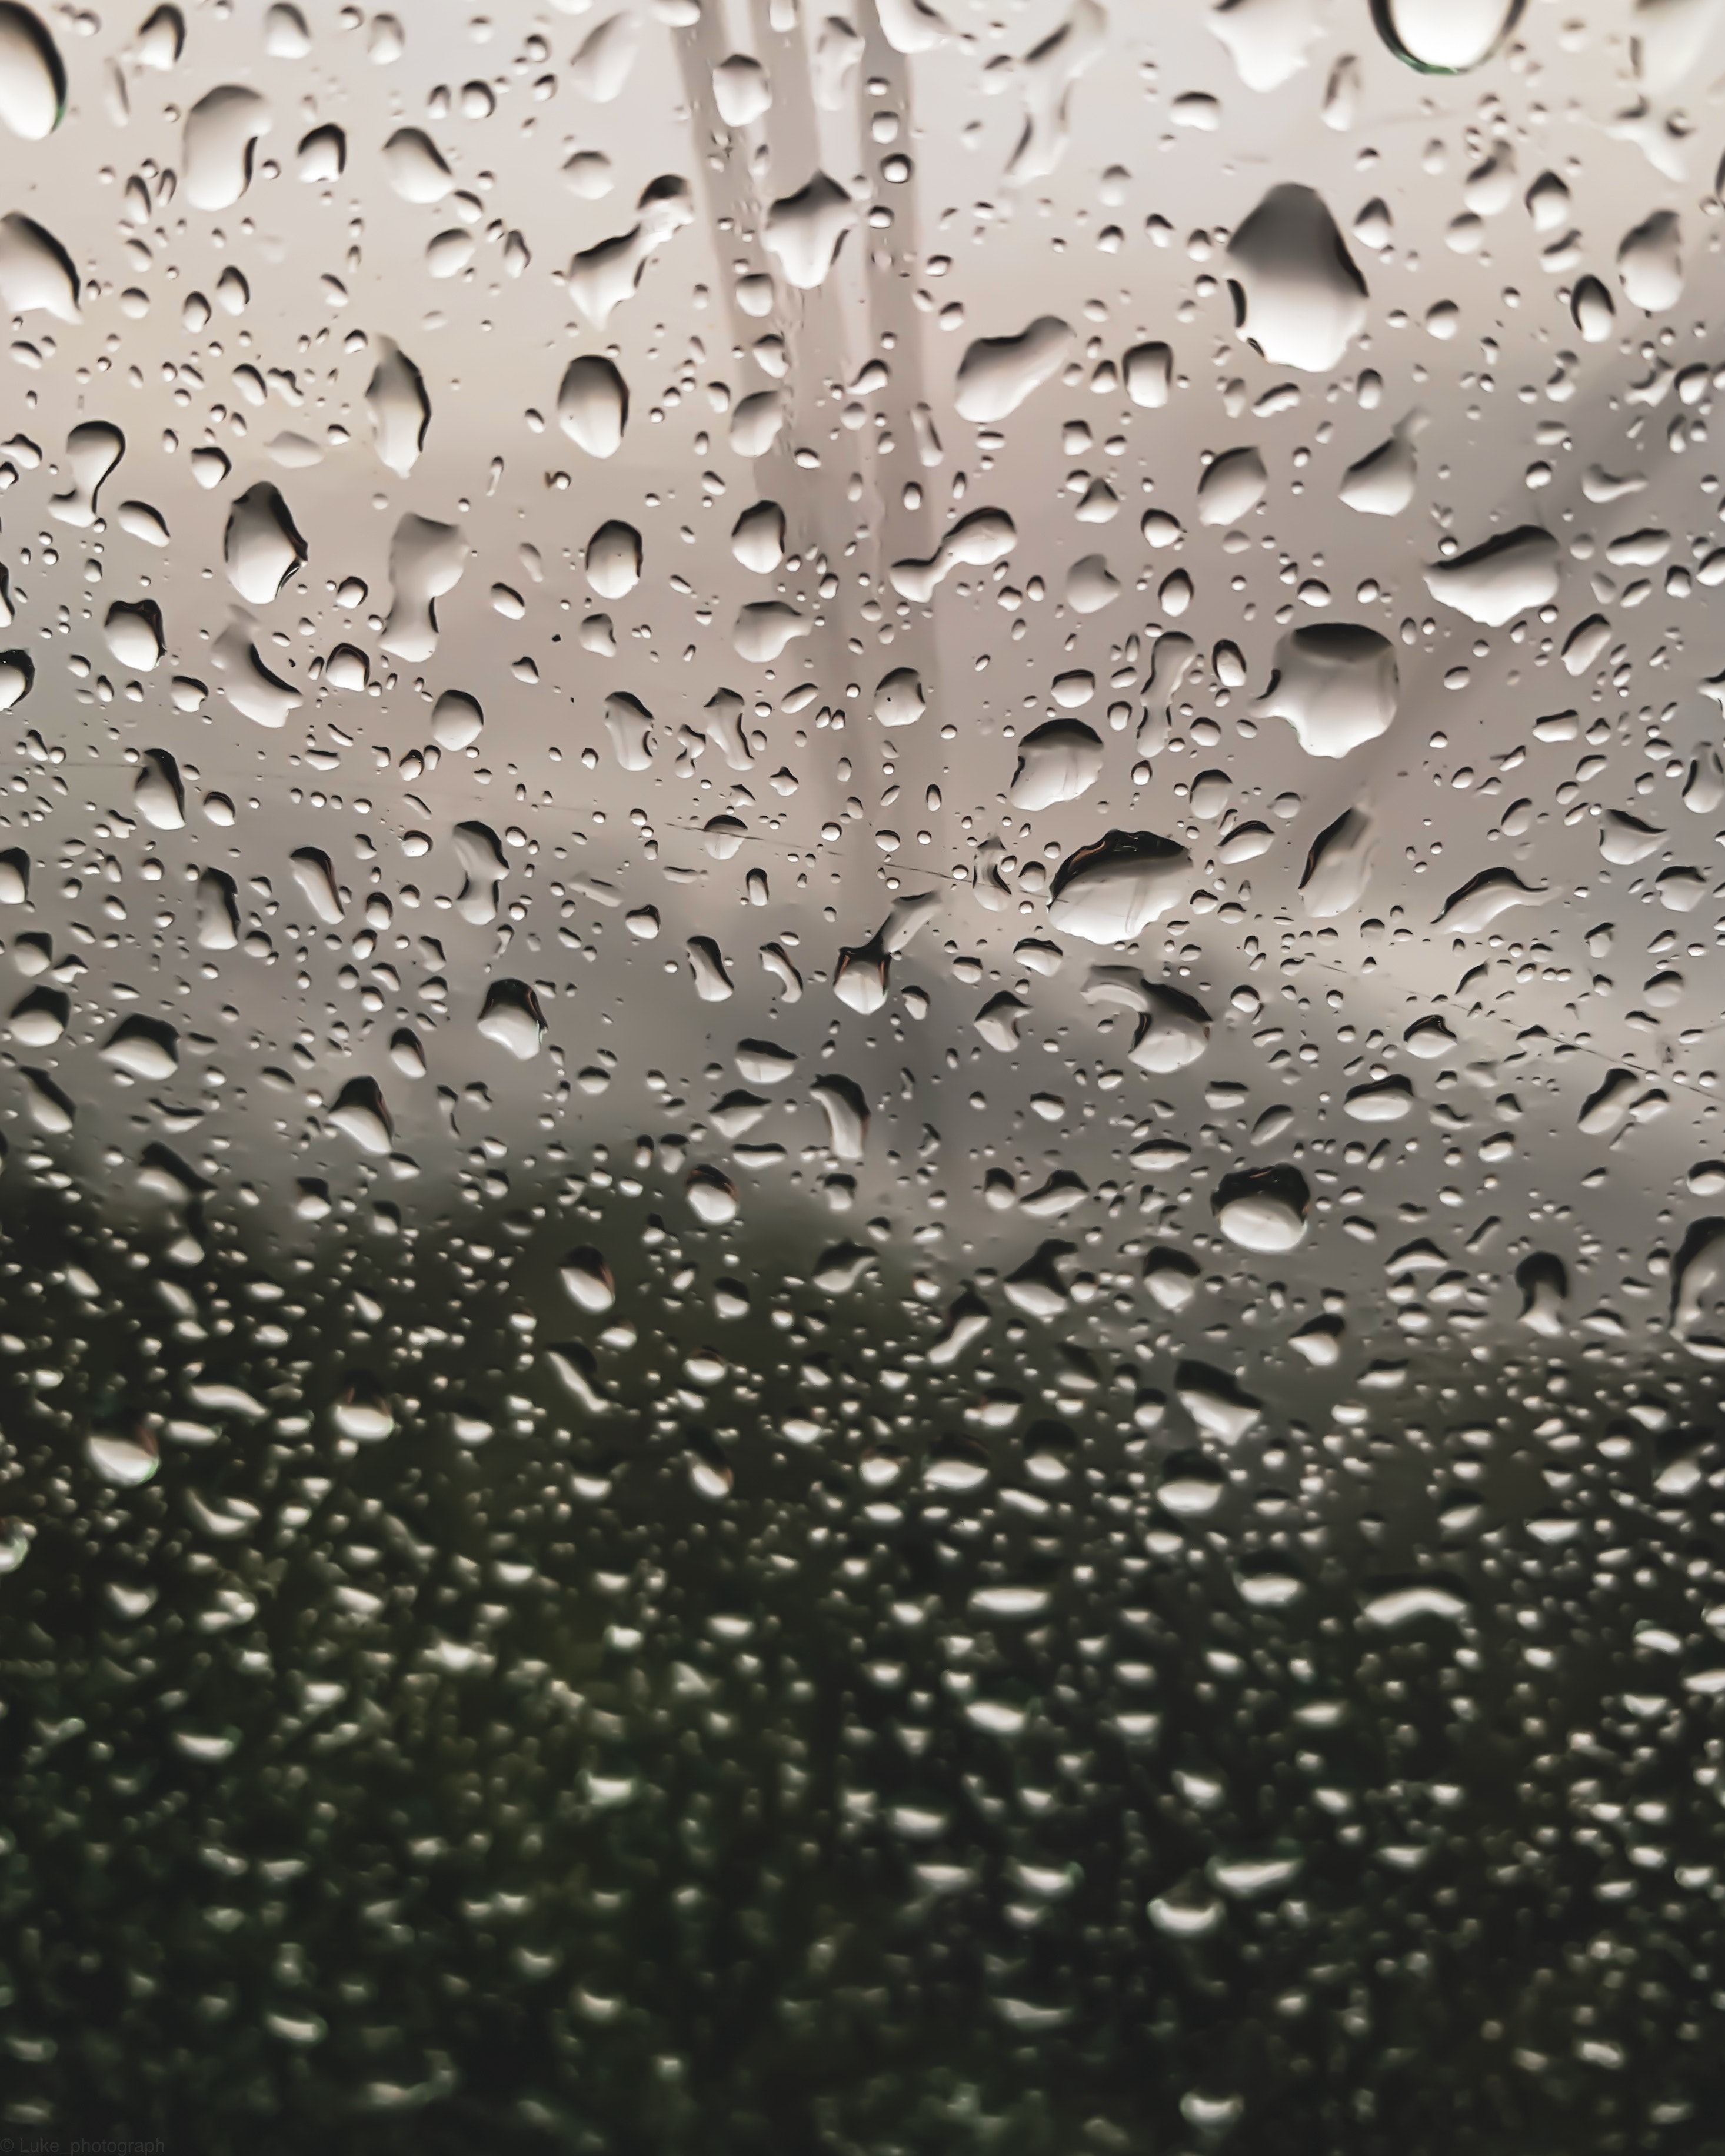 rain, drops, macro, moisture, glass, monochrome High Definition image